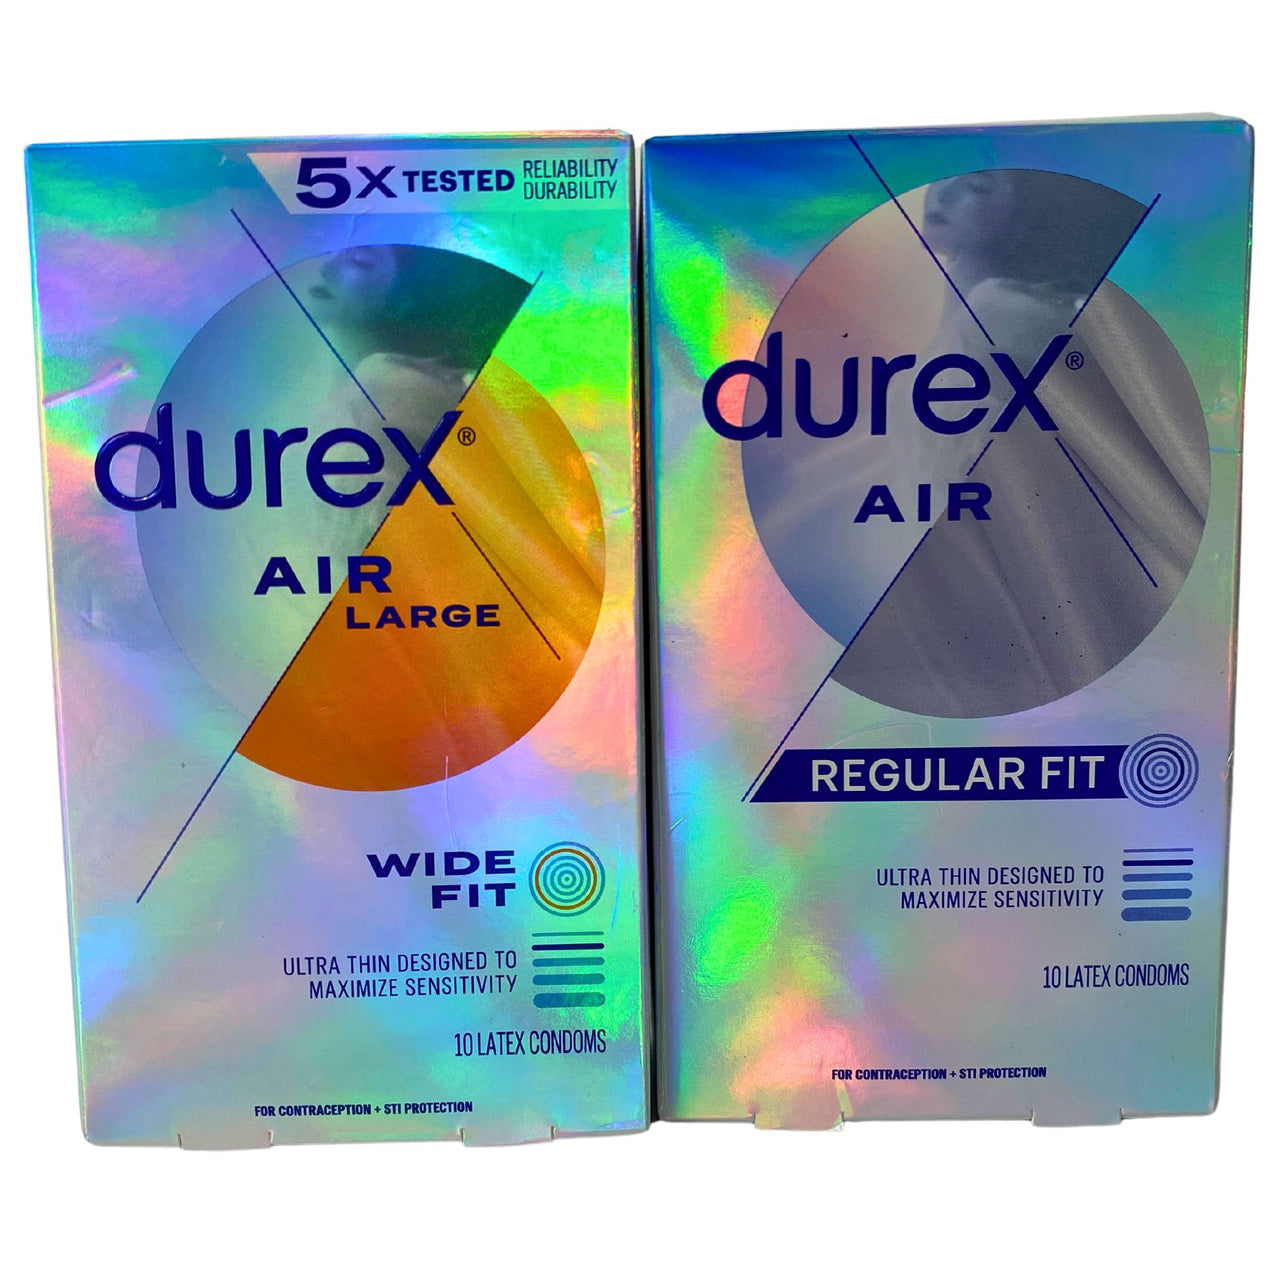 Durex Air Mix includes Regular Fit & Wide Fit 